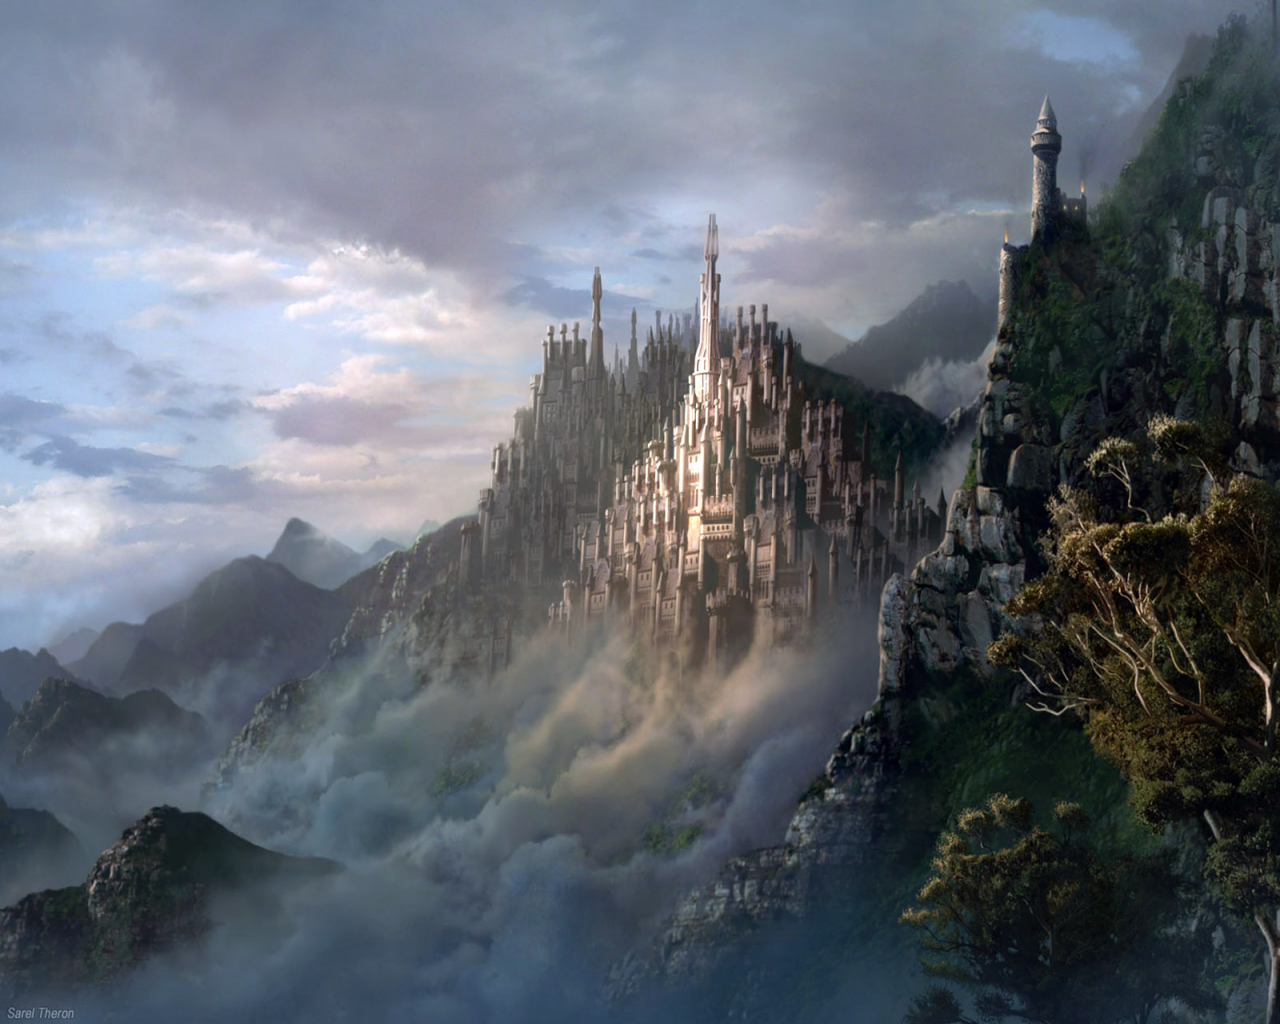 Fantasy Castle Desktop Wallpaper